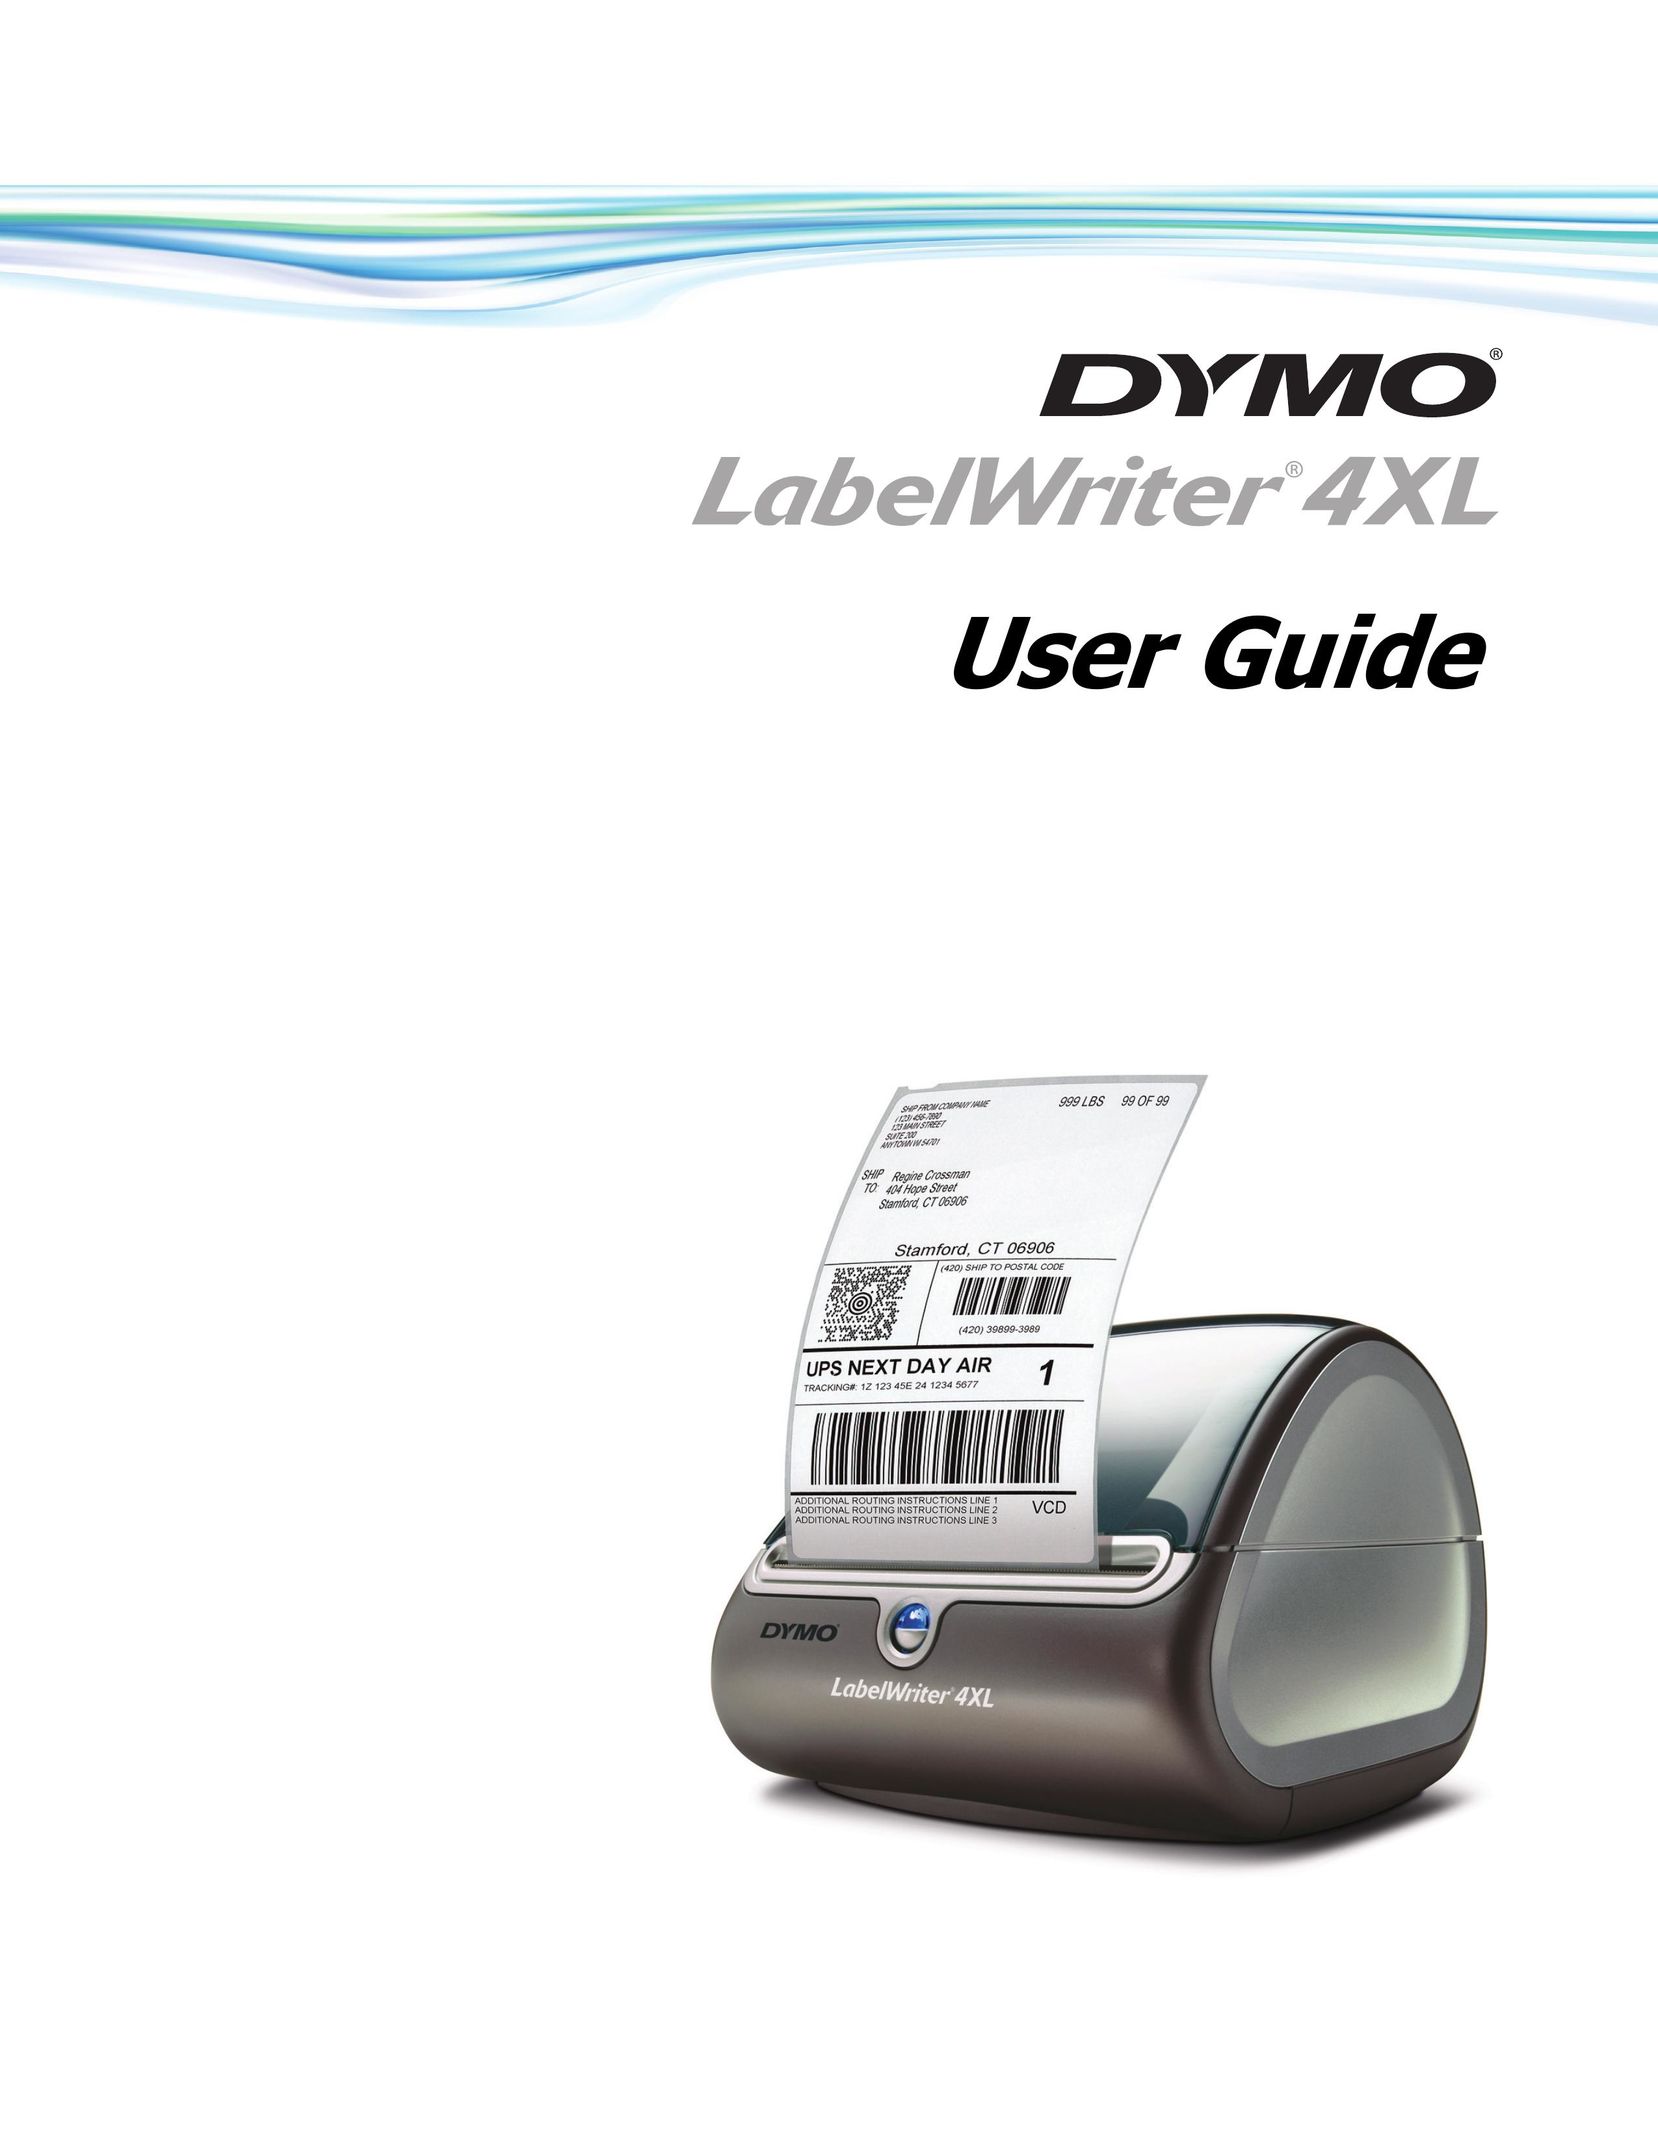 Dymo 4XL Printer User Manual